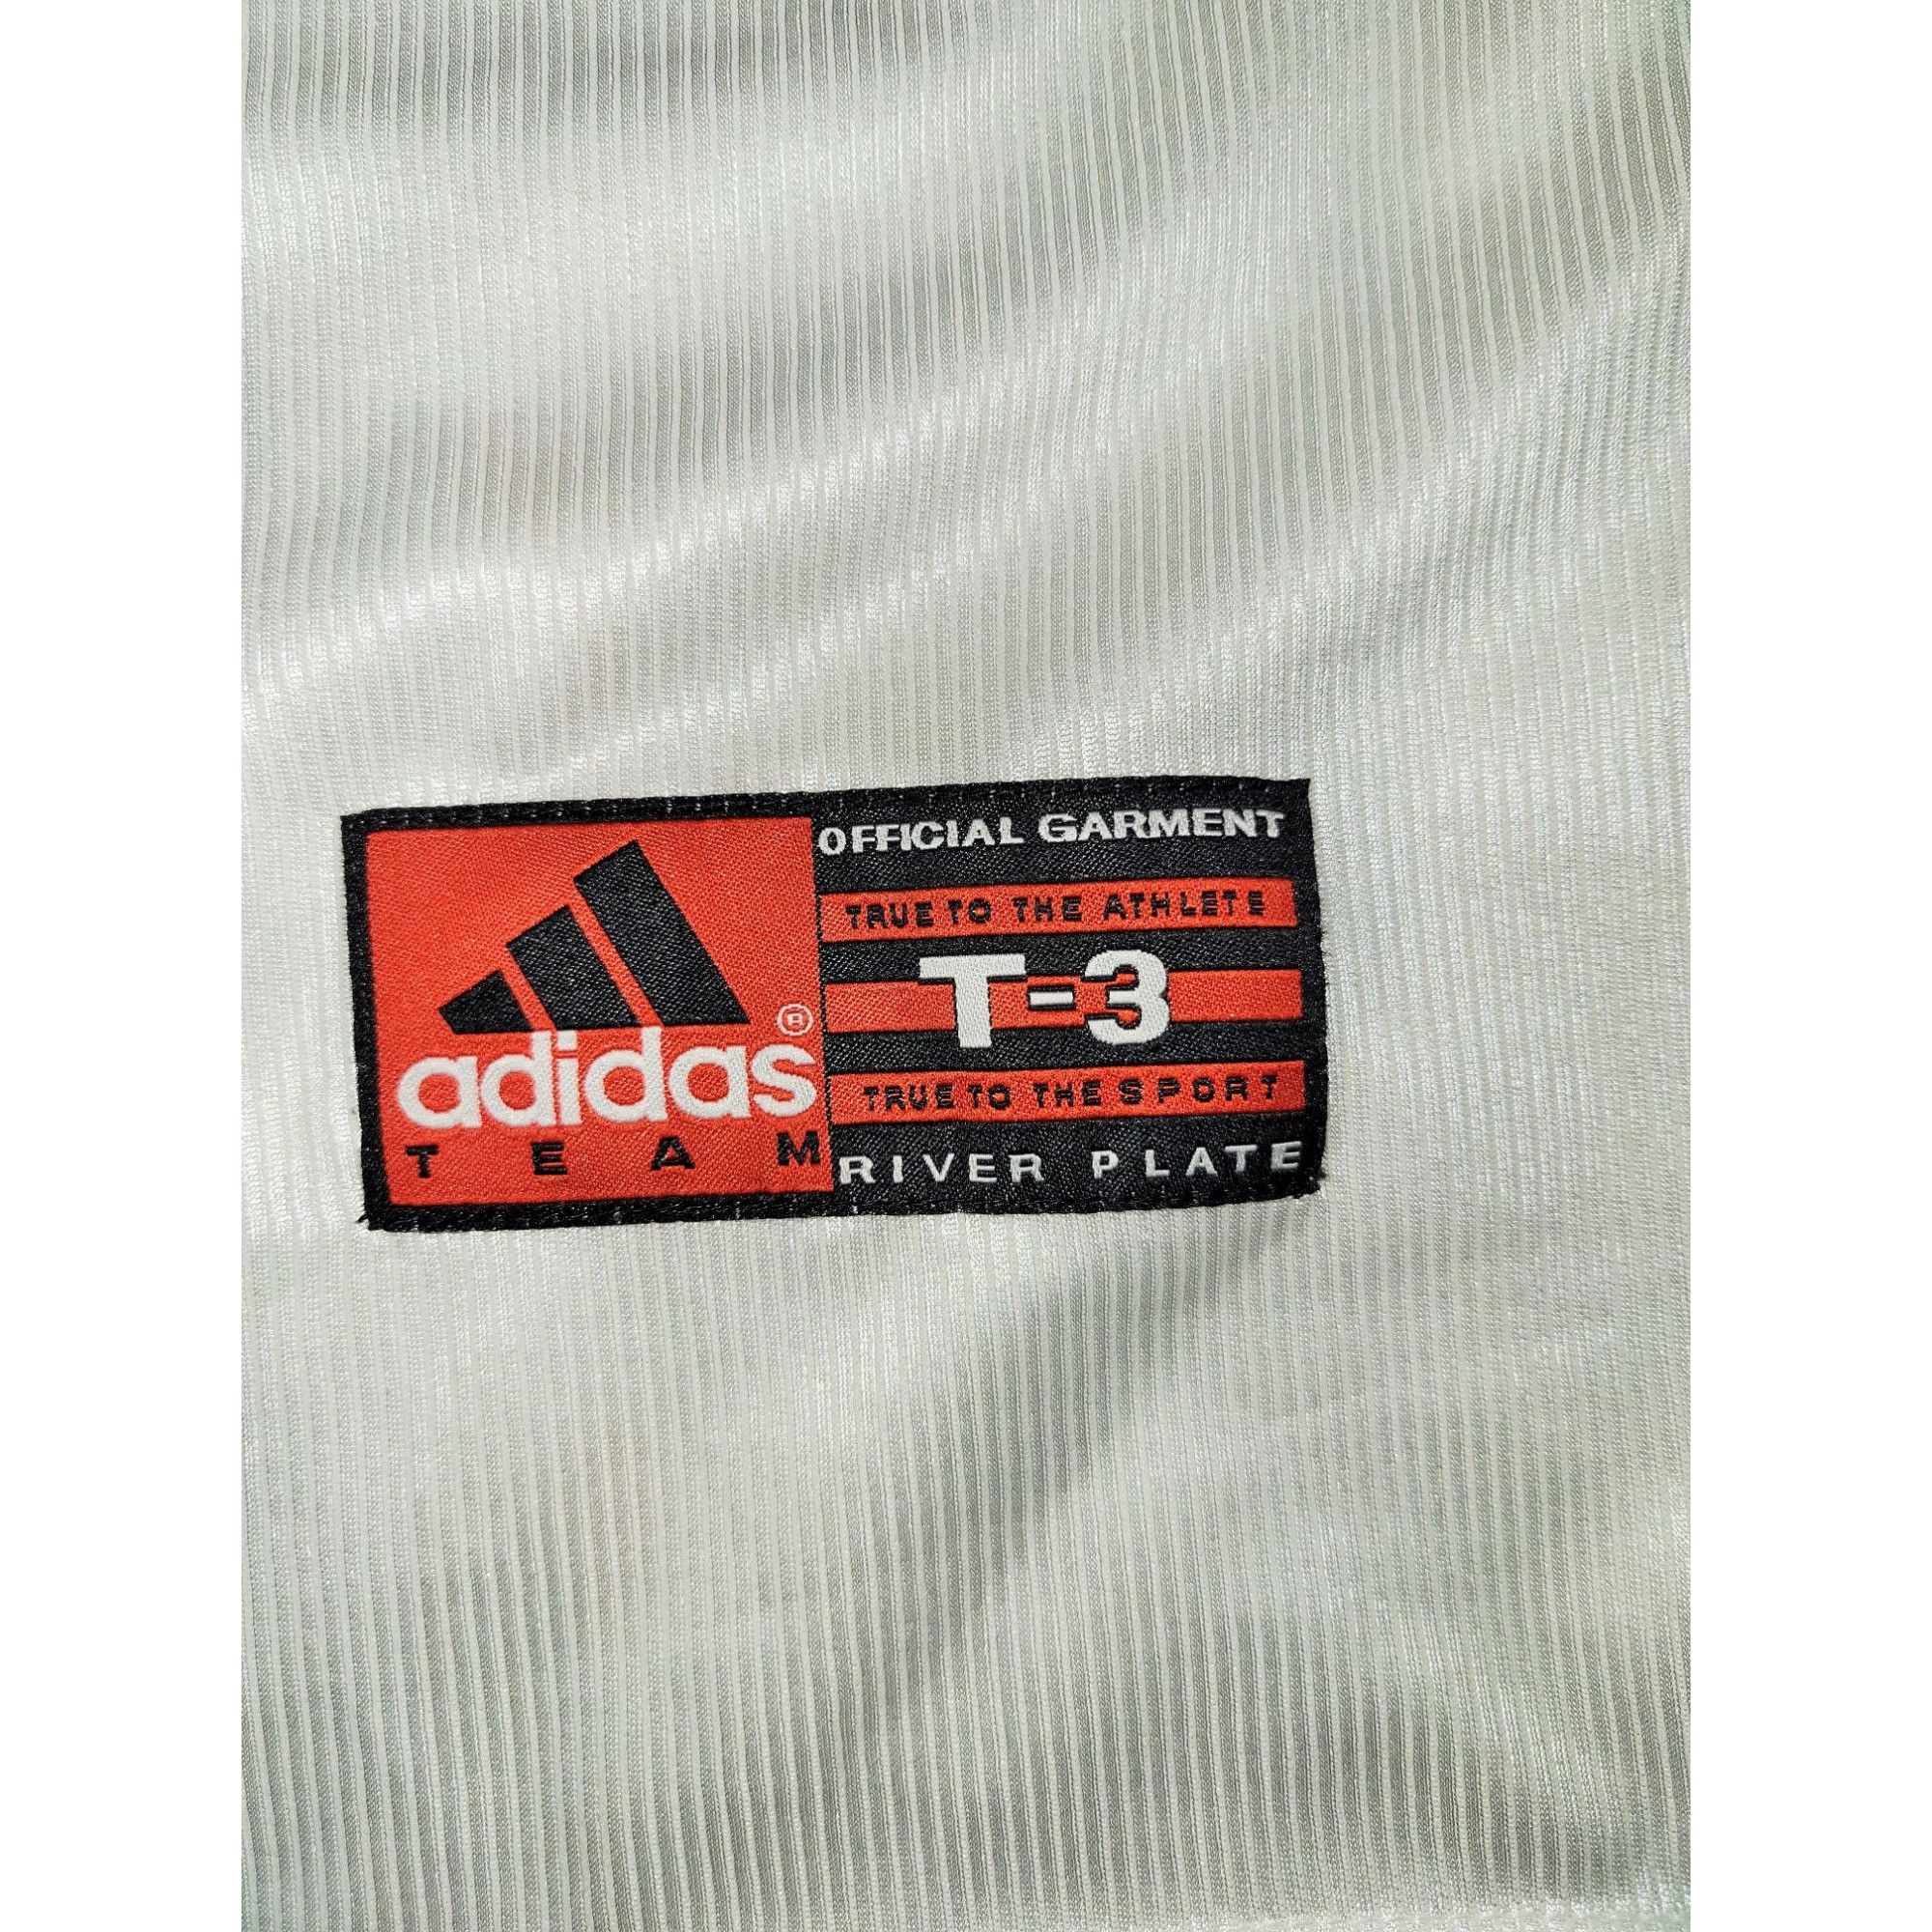 Adidas River Plate Adidas 1998 1999 2000 LTD EDITION Soccer Jersey Size US M / EU 48-50 / 2 - 8 Thumbnail